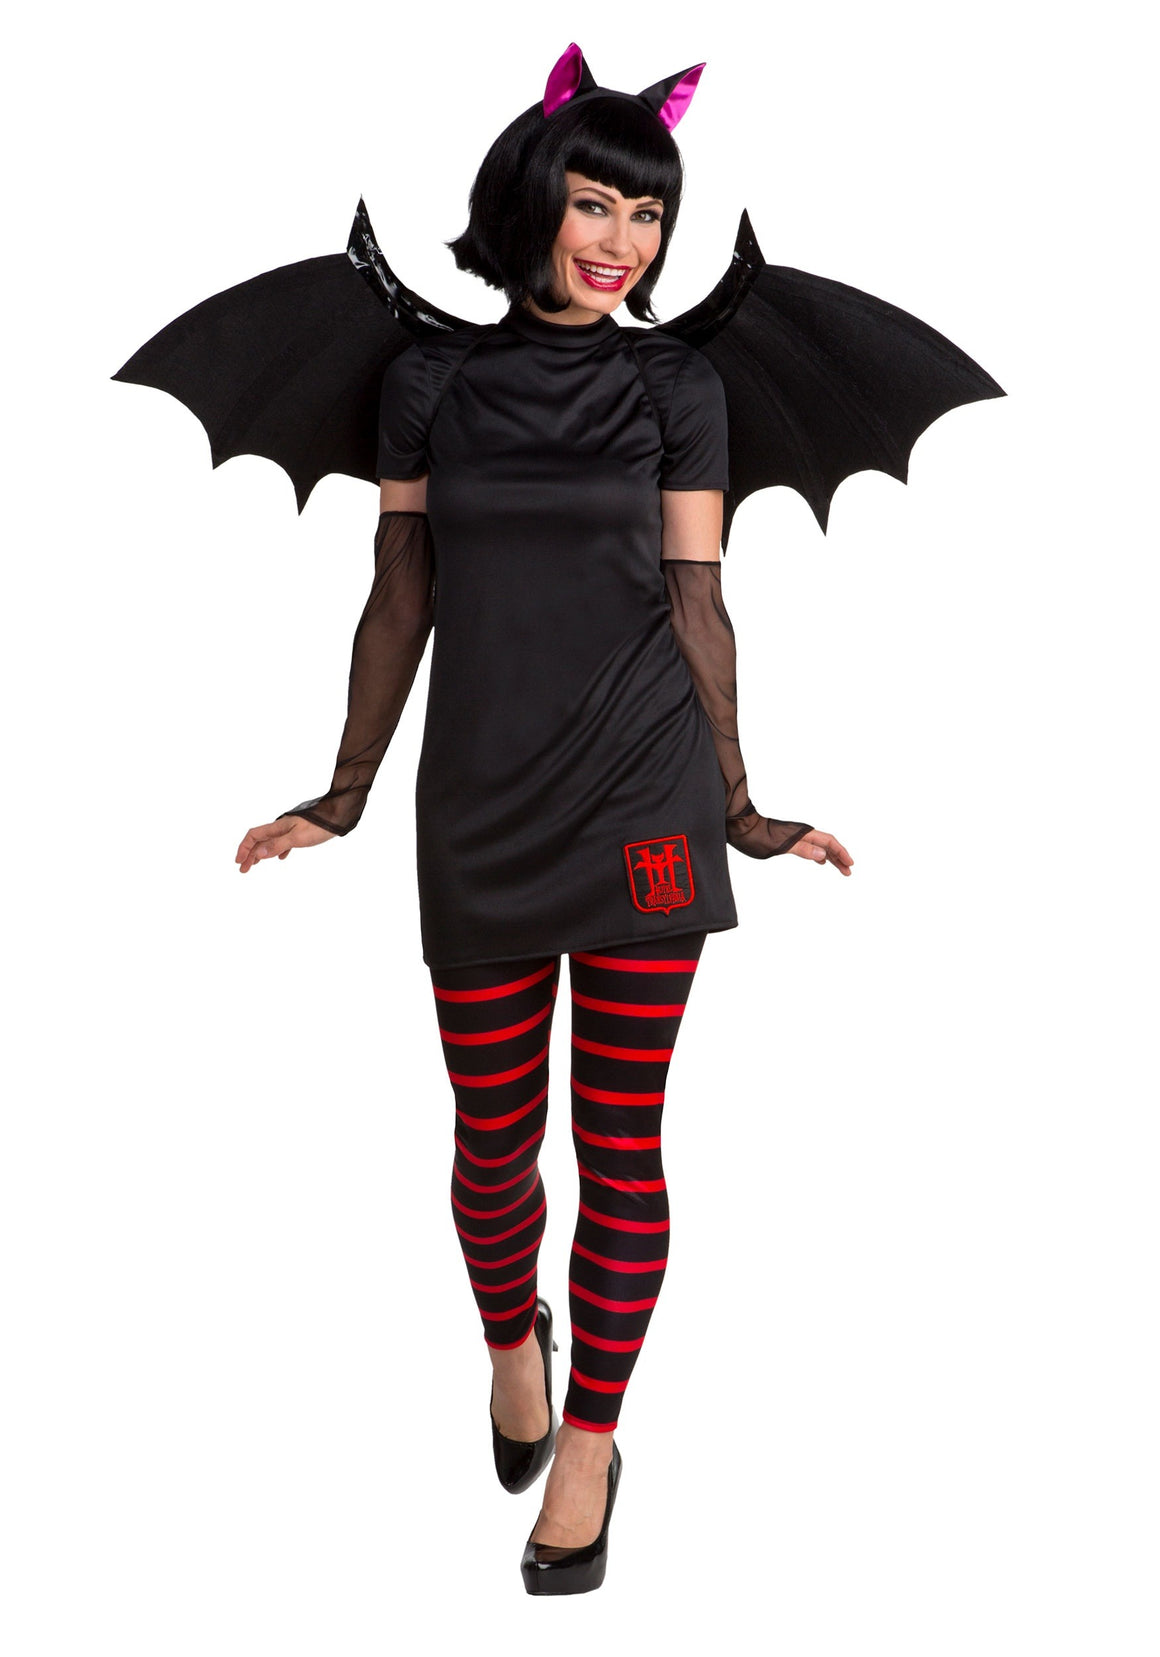 Hotel Transylvania Mavis Costume for Women – Kids Halloween Costumes